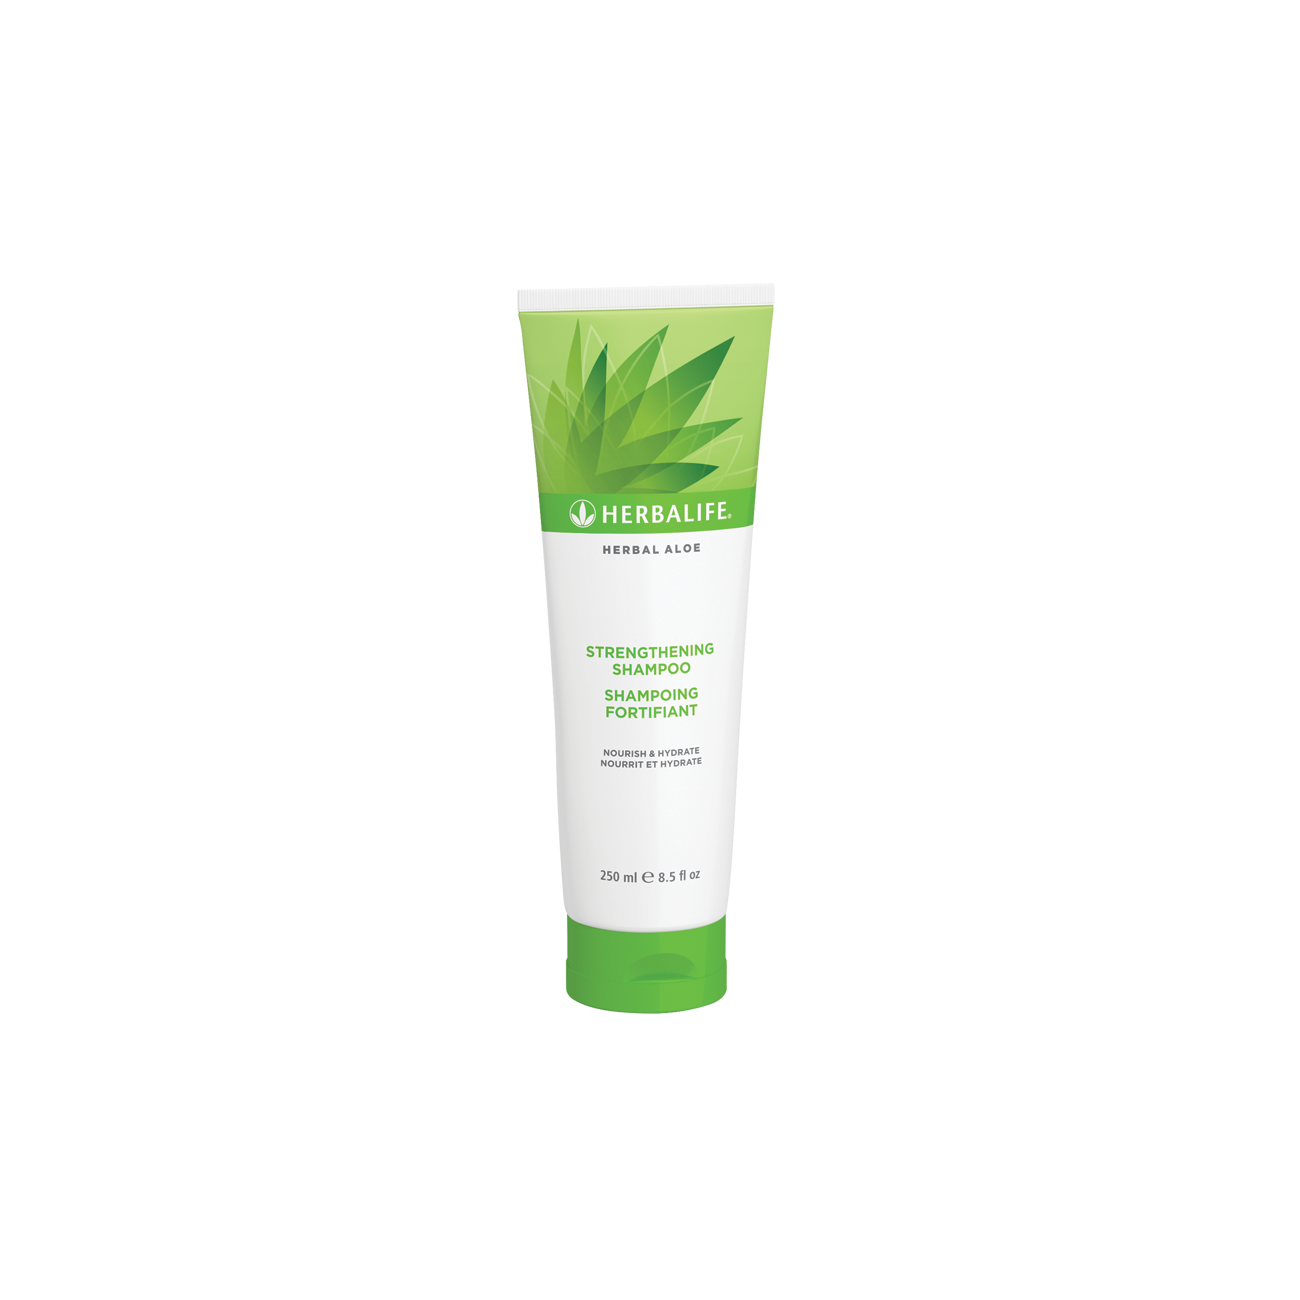 Herbal Aloe Strengthening Shampoo  product shot.